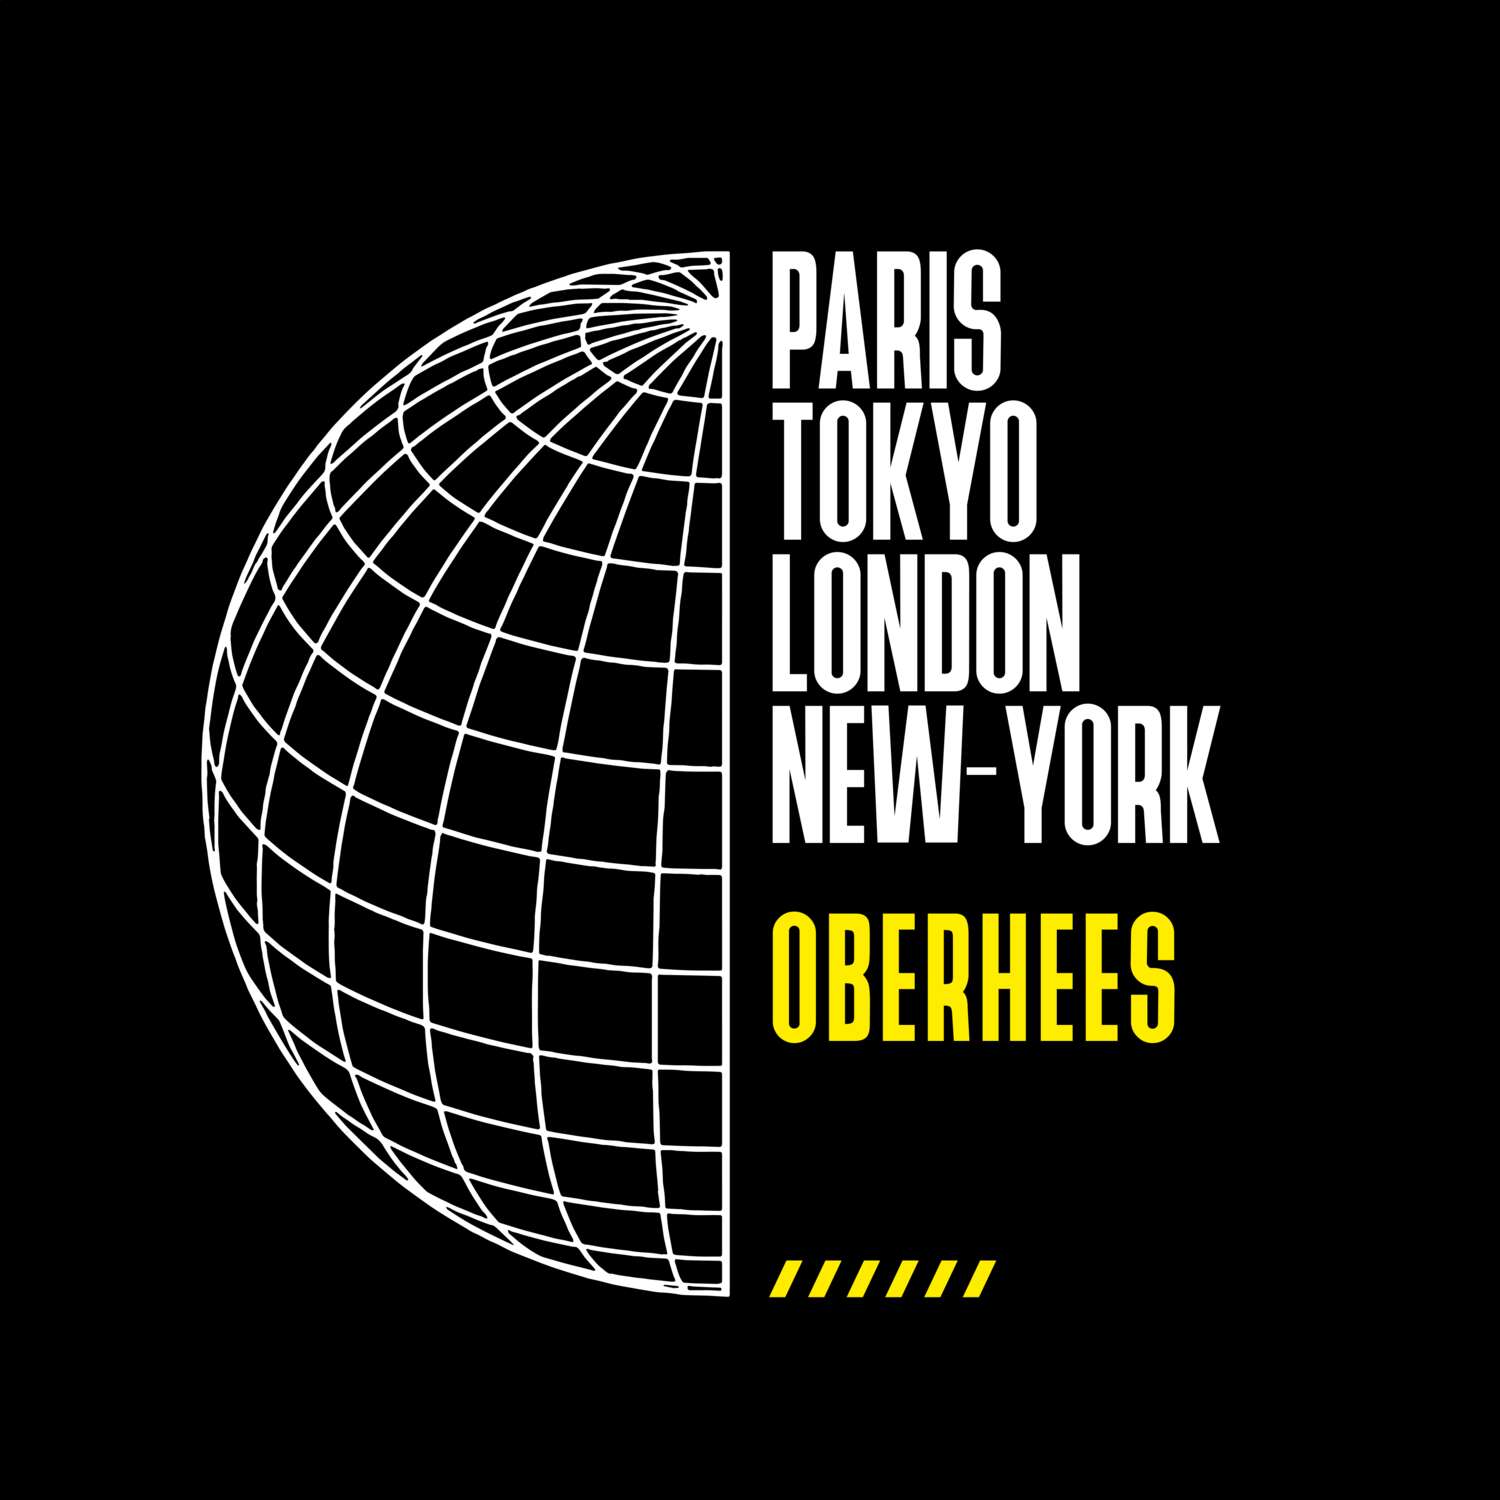 Oberhees T-Shirt »Paris Tokyo London«